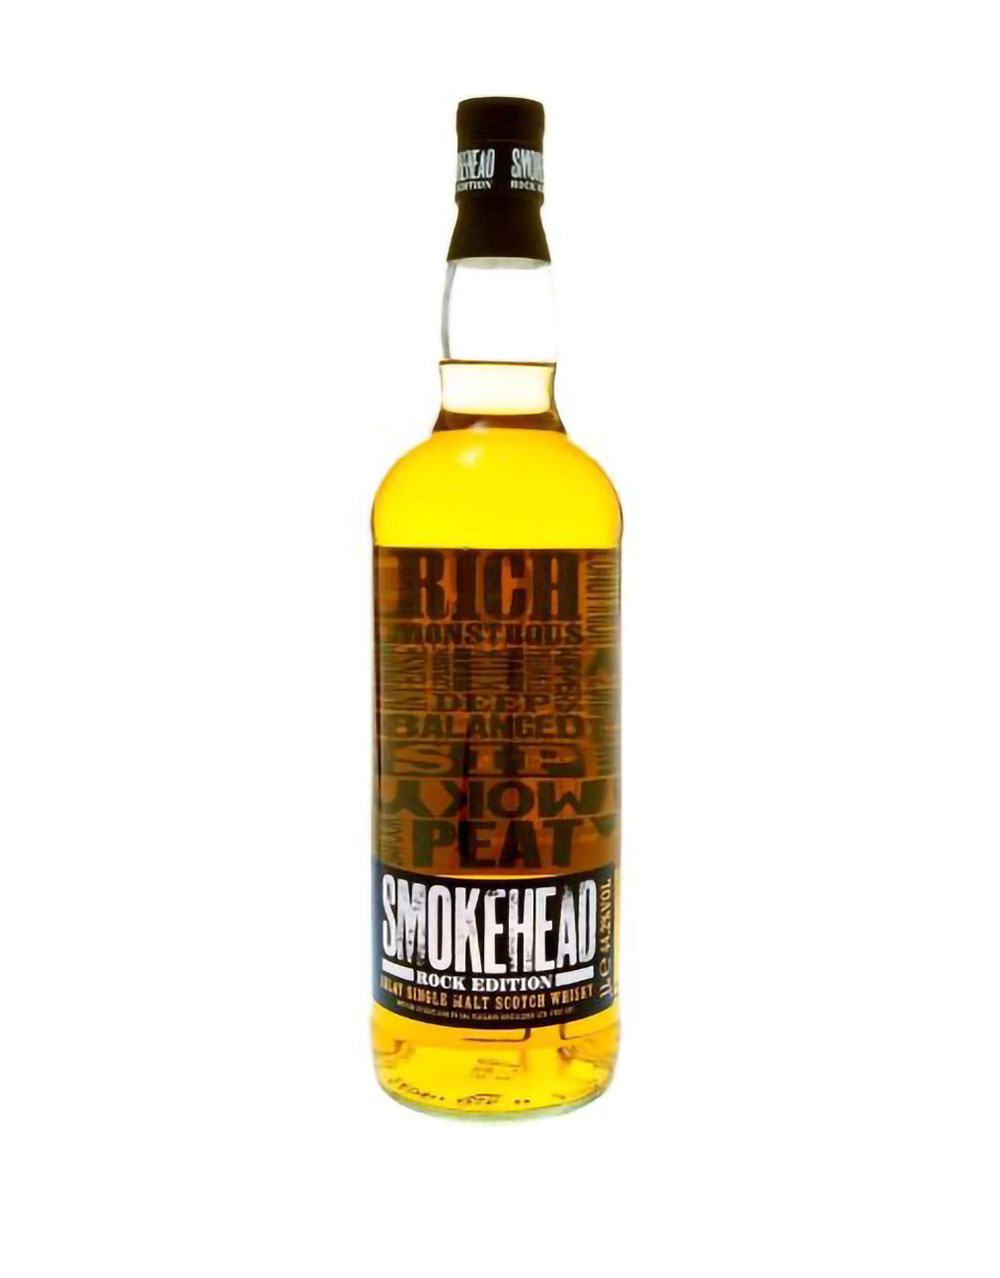 Smokehead Single Malt Scotch Whisky